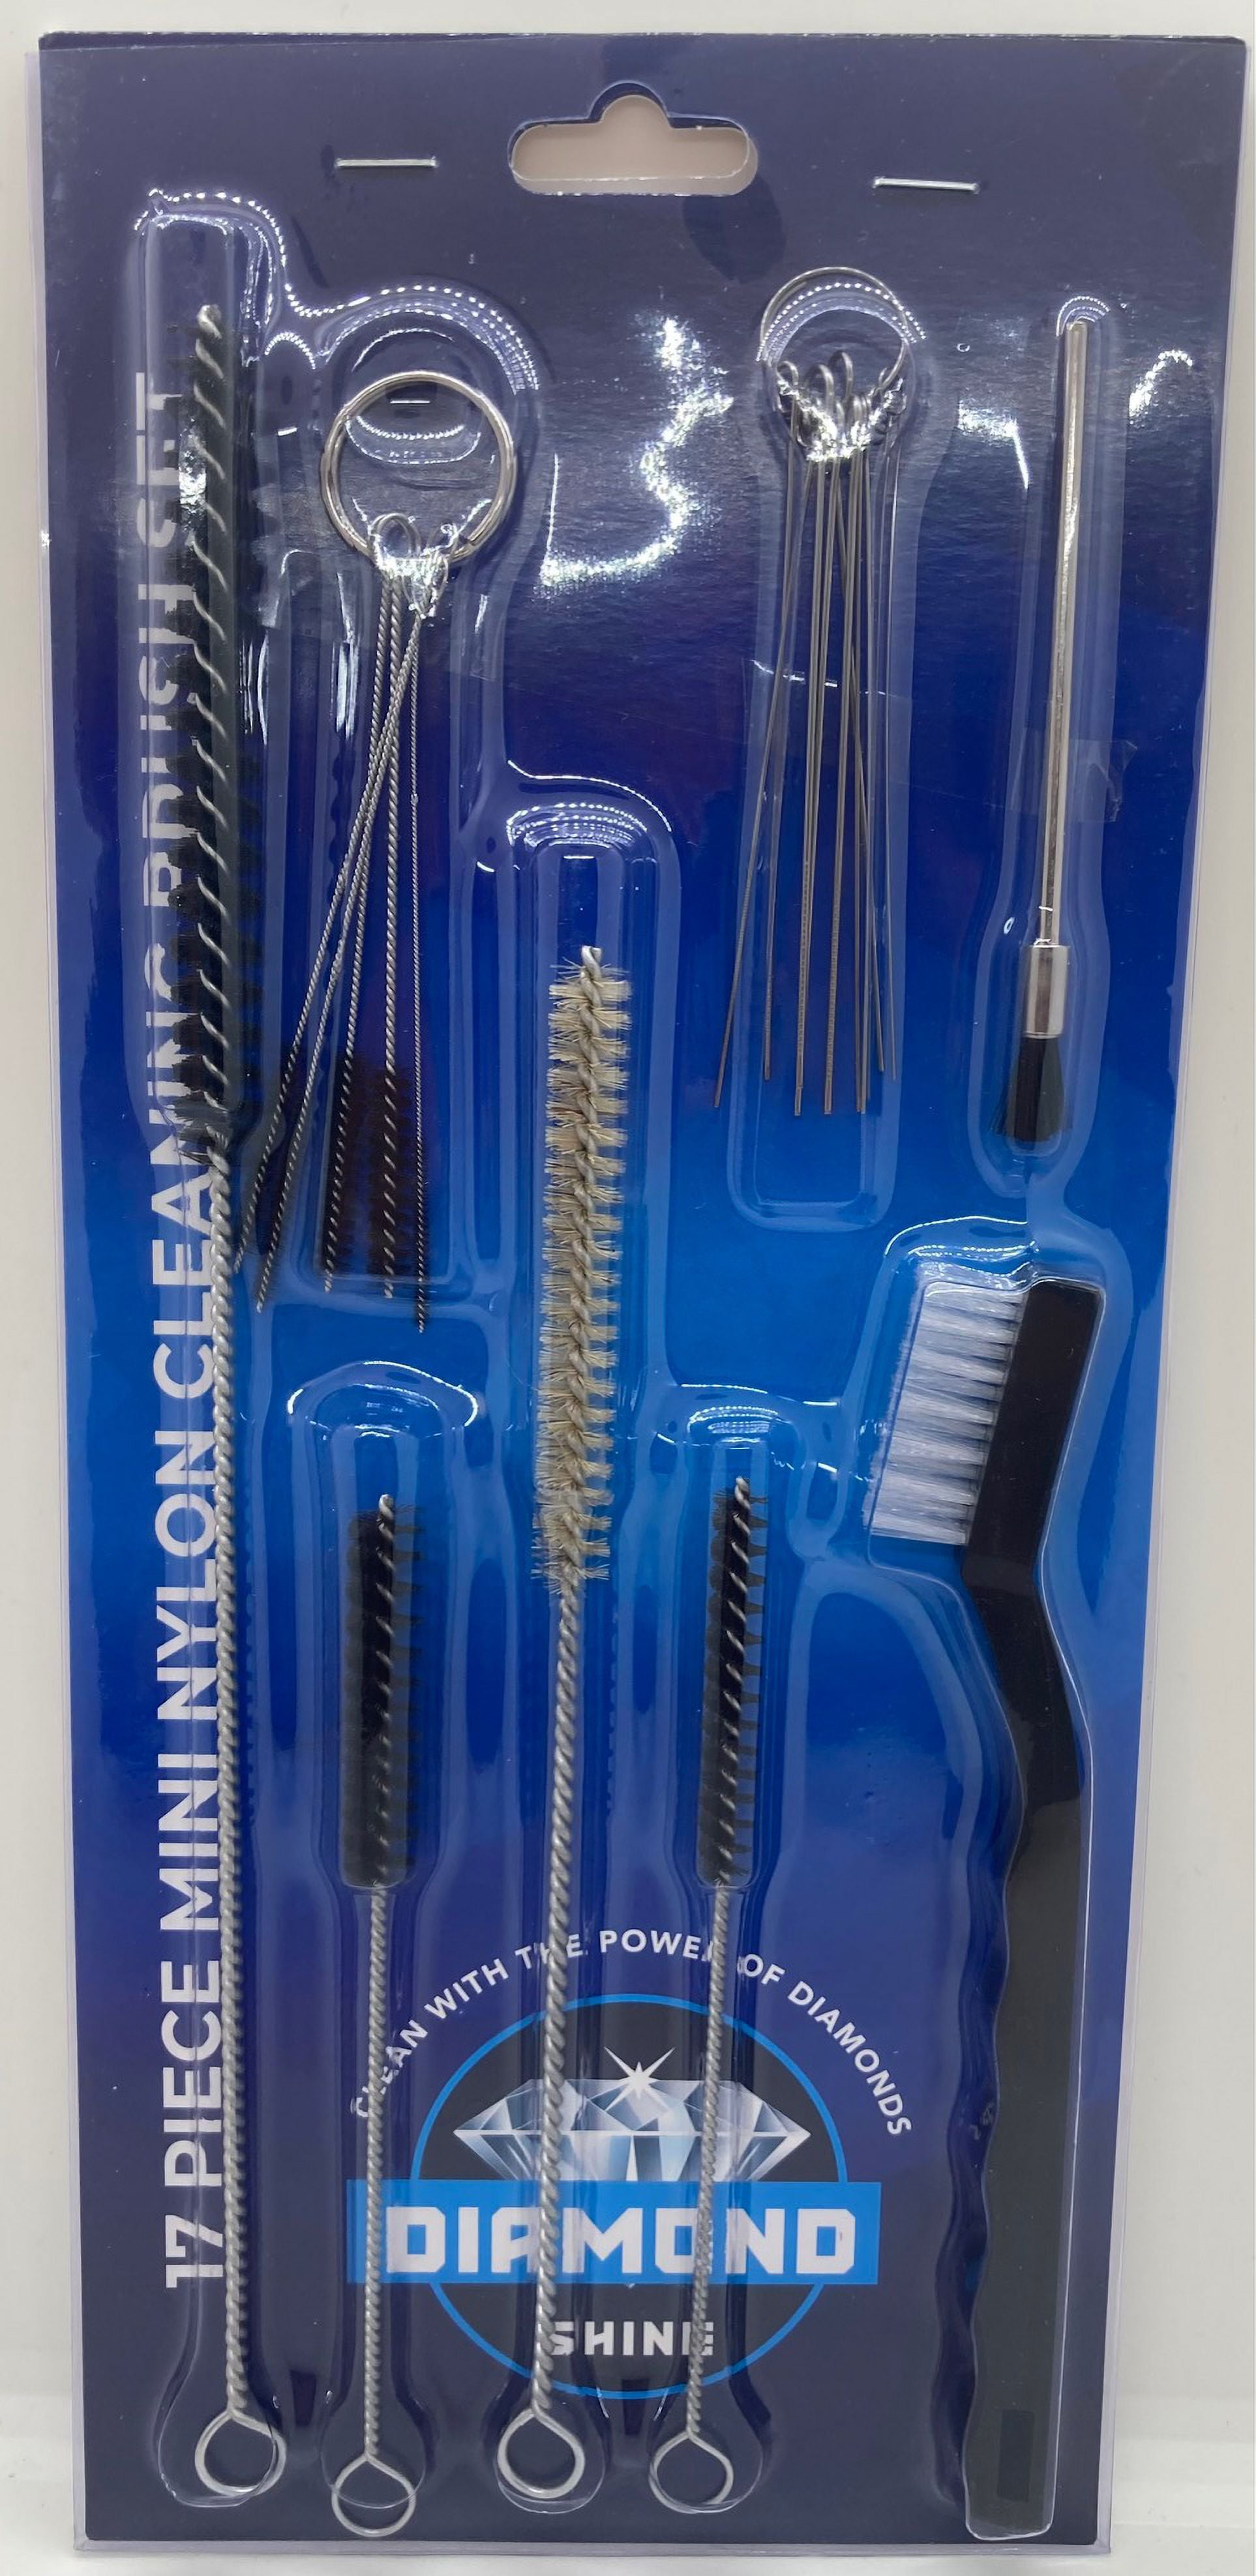 Maxmoral 10PCS Cleaning Needles, Mini Airbrush Cleaning Brush Set